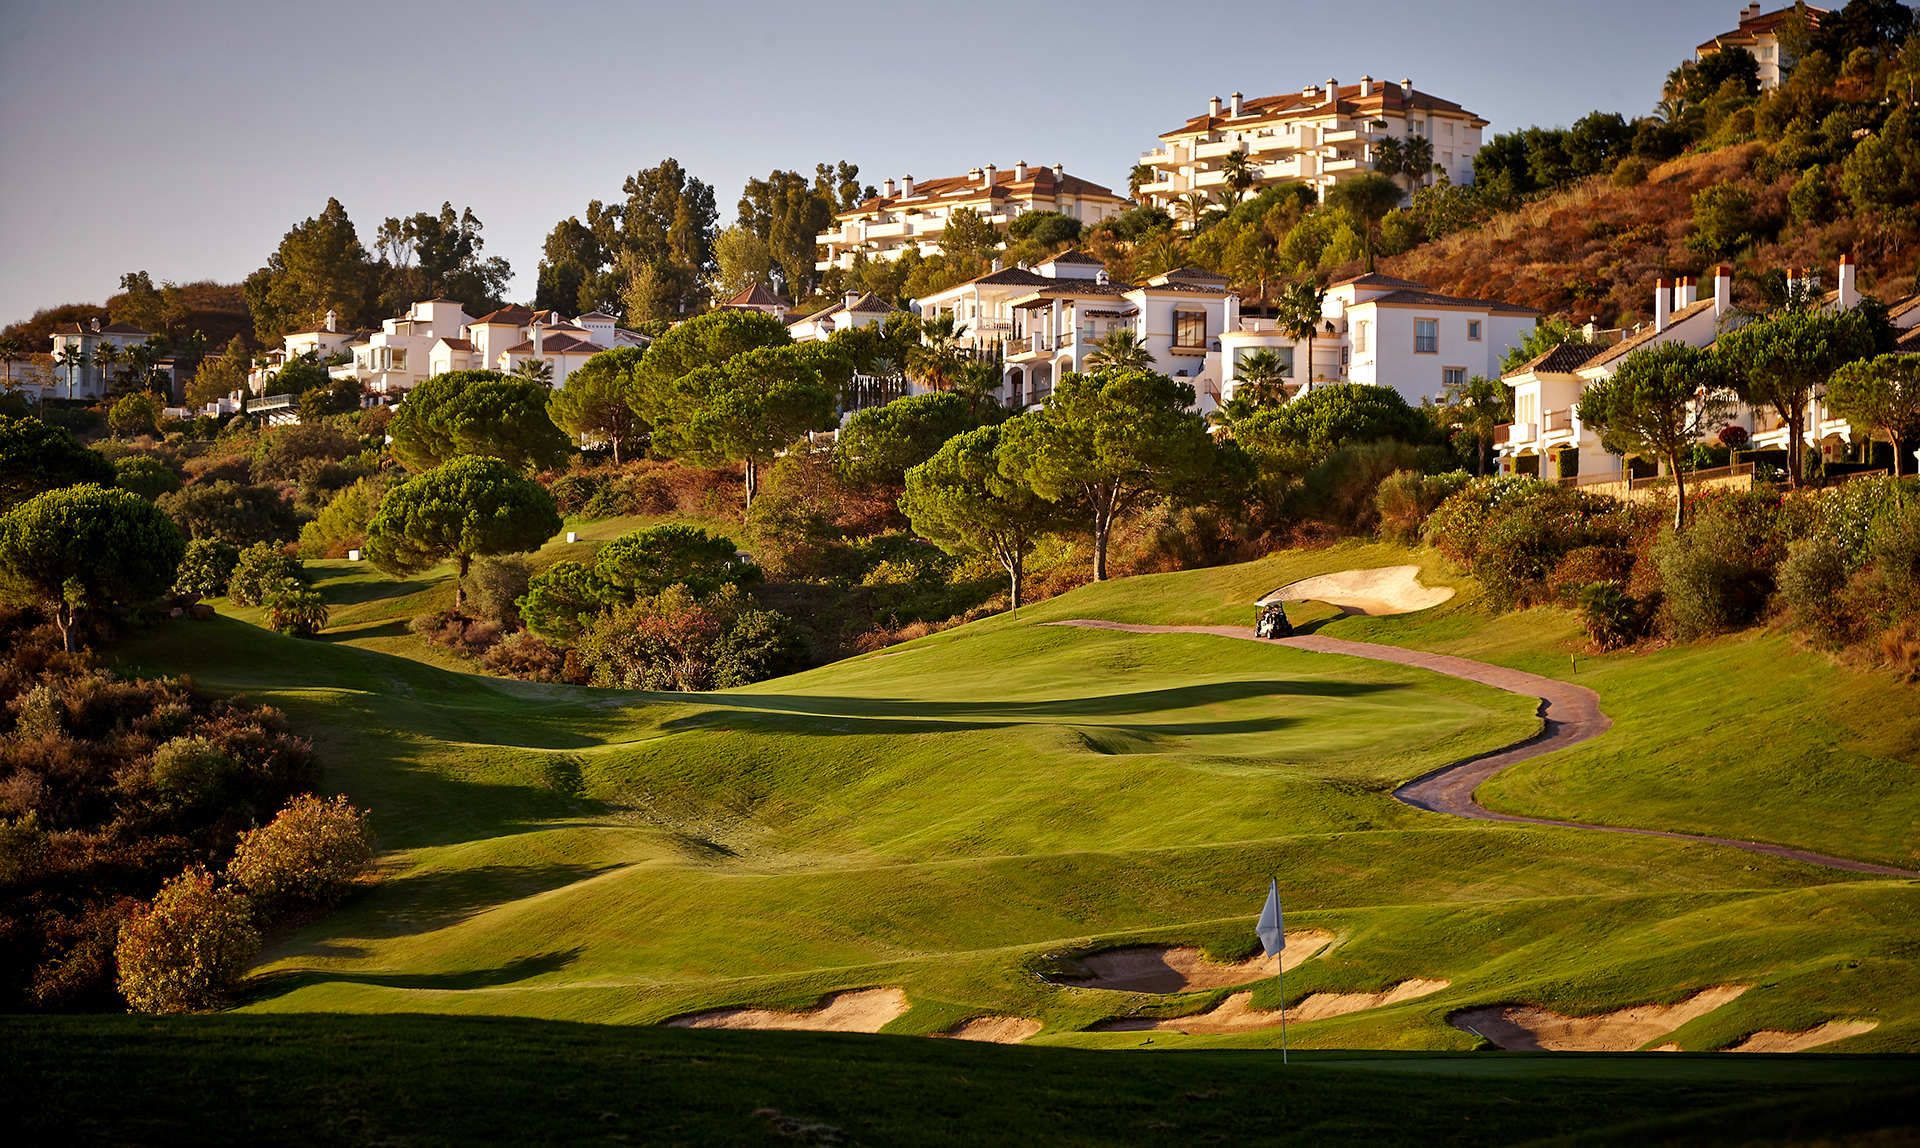 Golf-Expedition-Golf-reizen-Spanje-Regio-Malaga-La-Cala-Resort-golf-course-resort